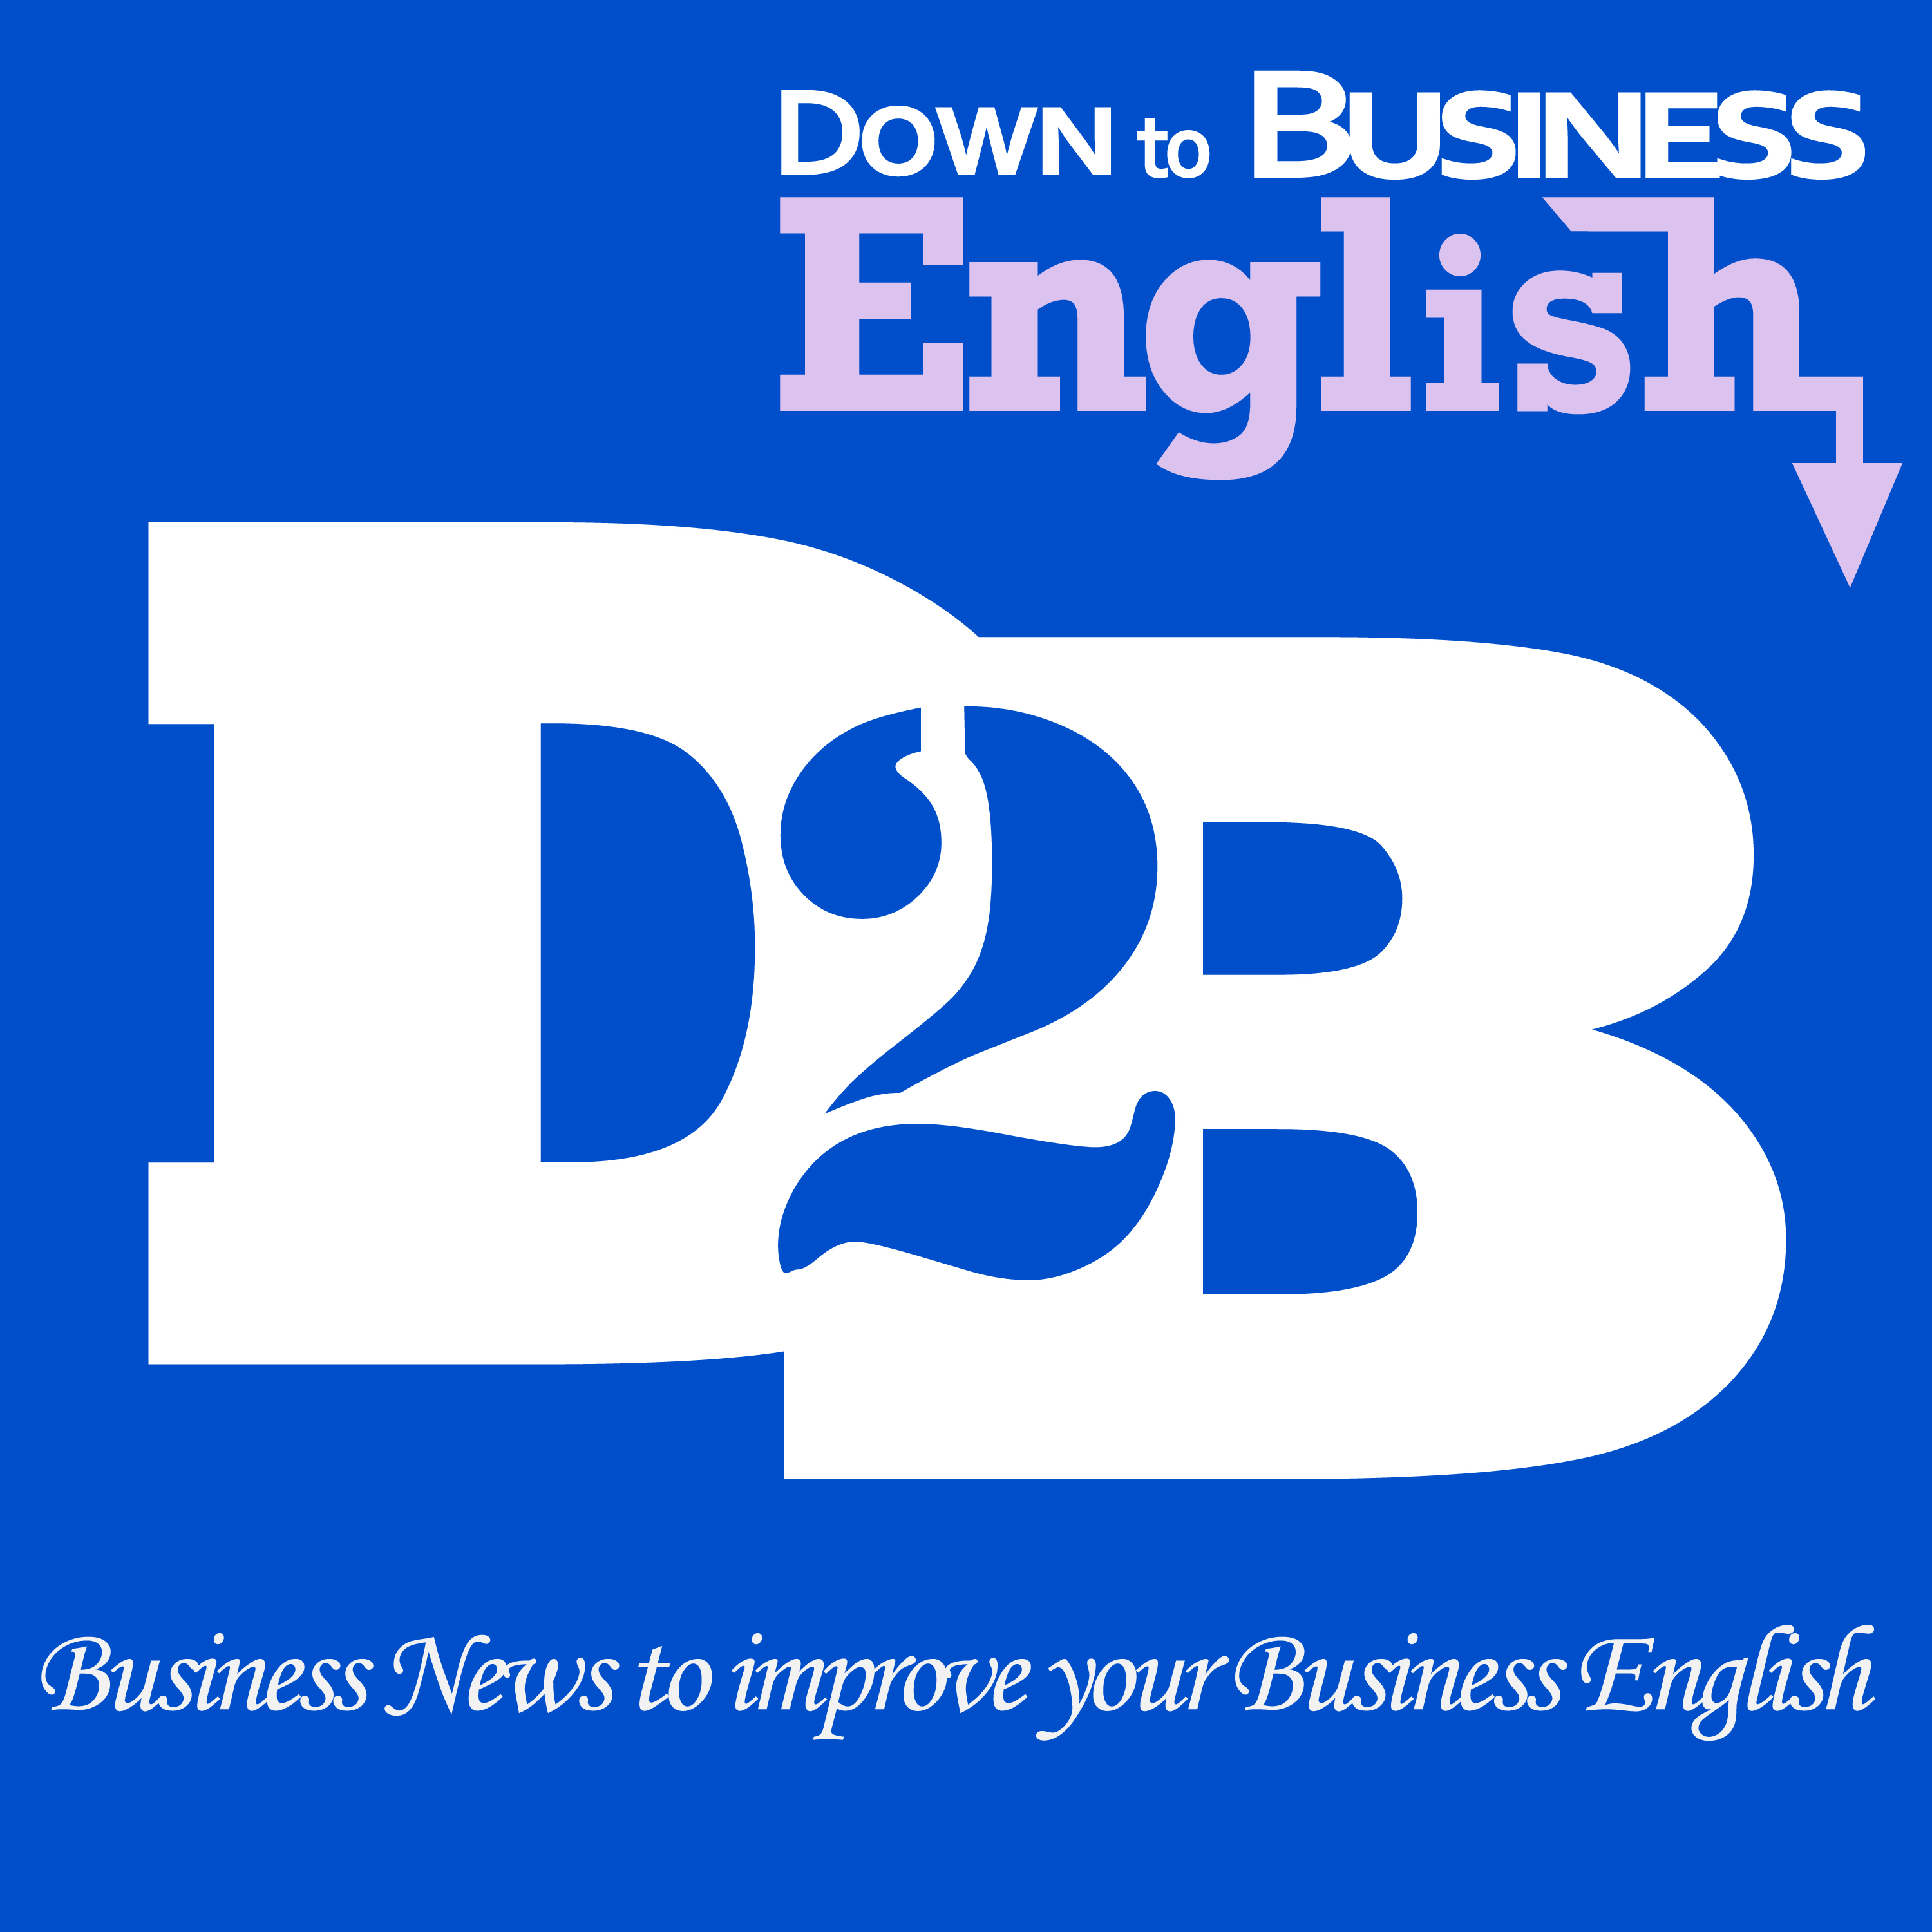 http://downtobusinessenglish.com/images/d2b_logo.jpg